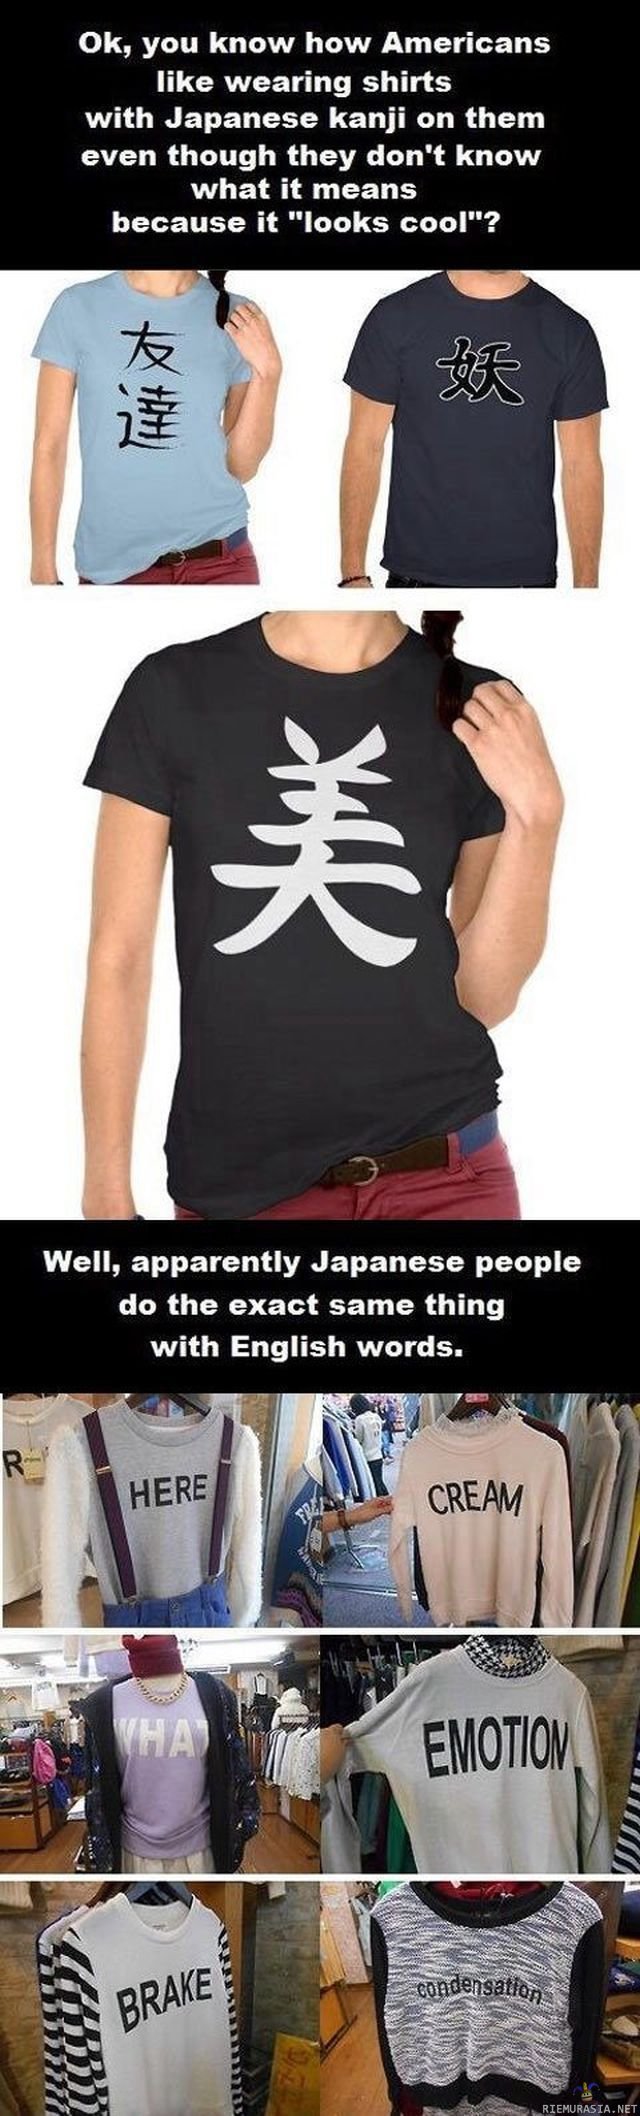 Kanji shirts